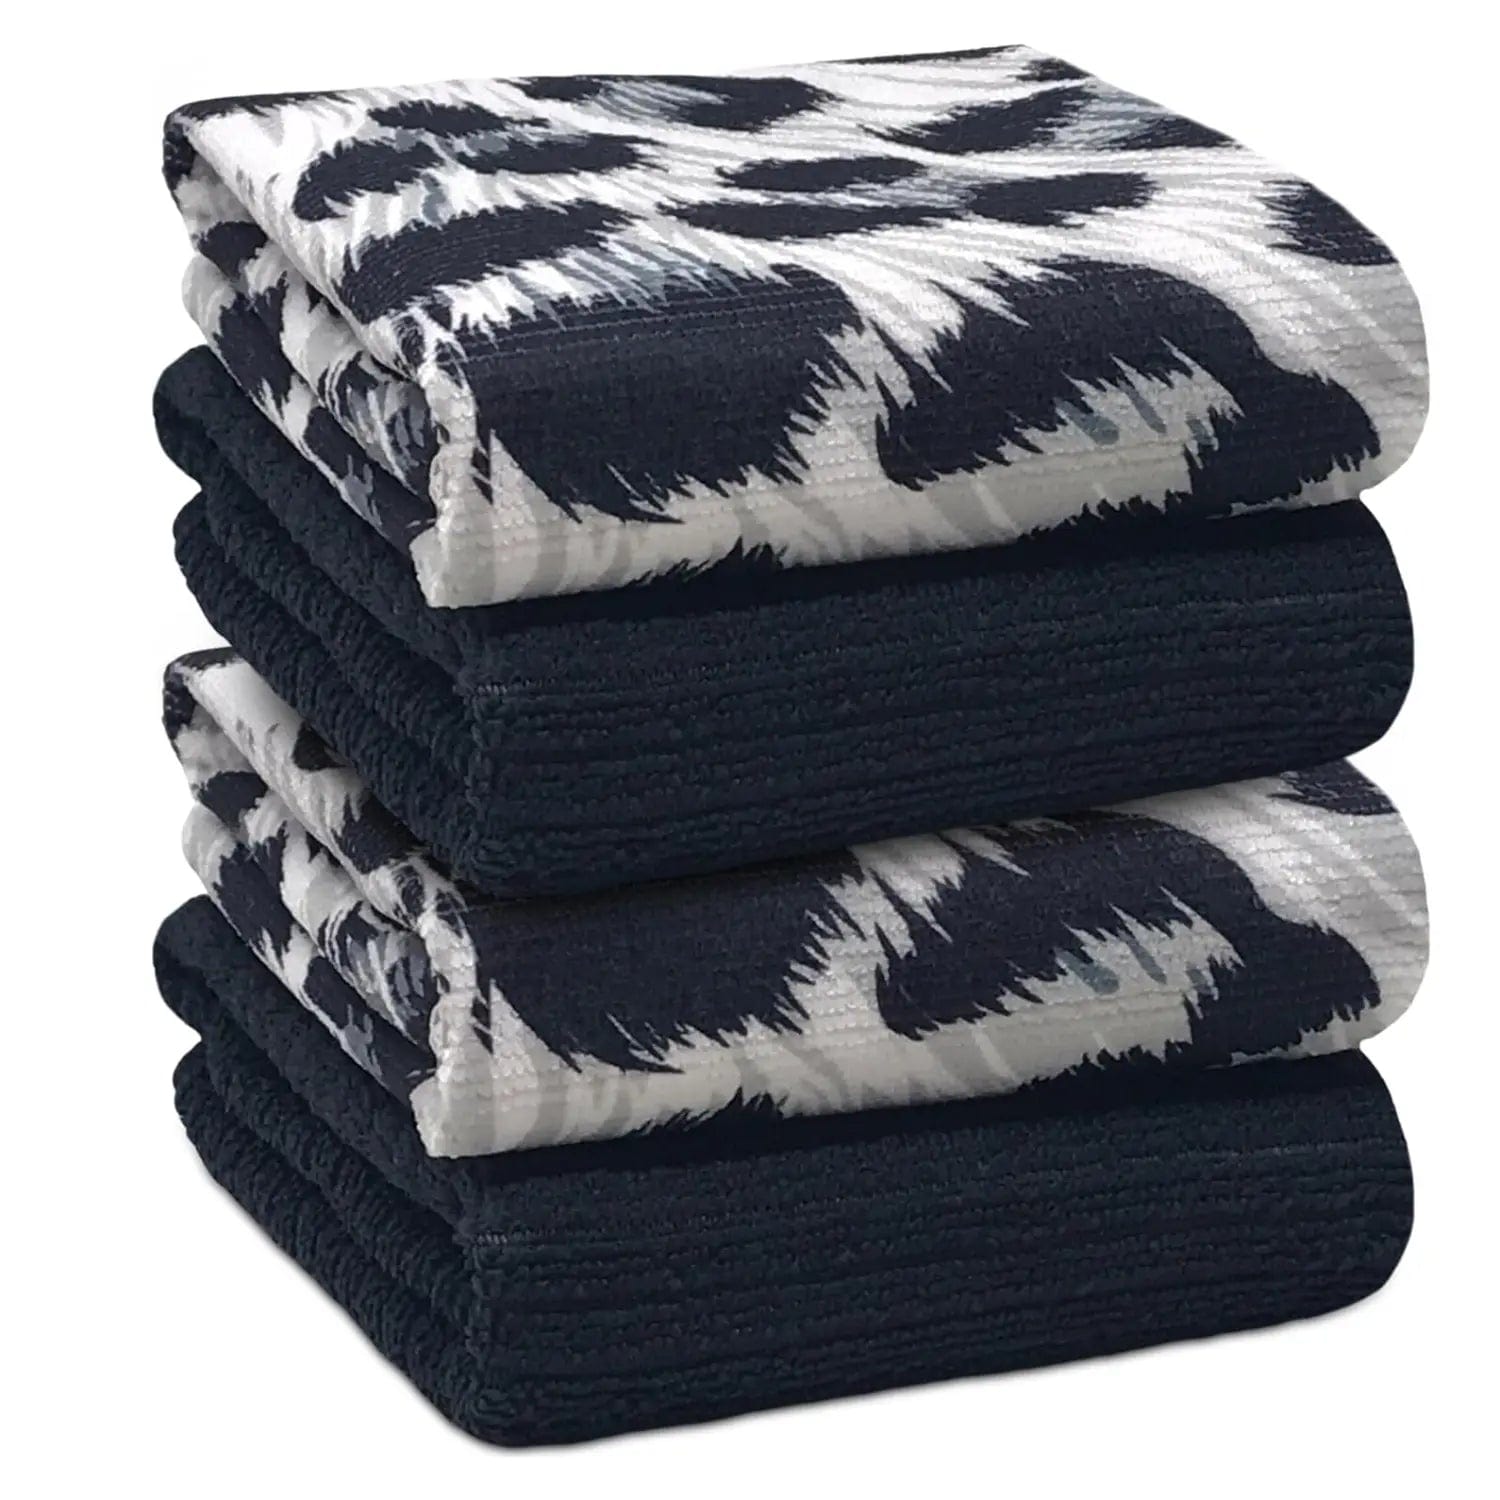 black Cheetah Printe towels